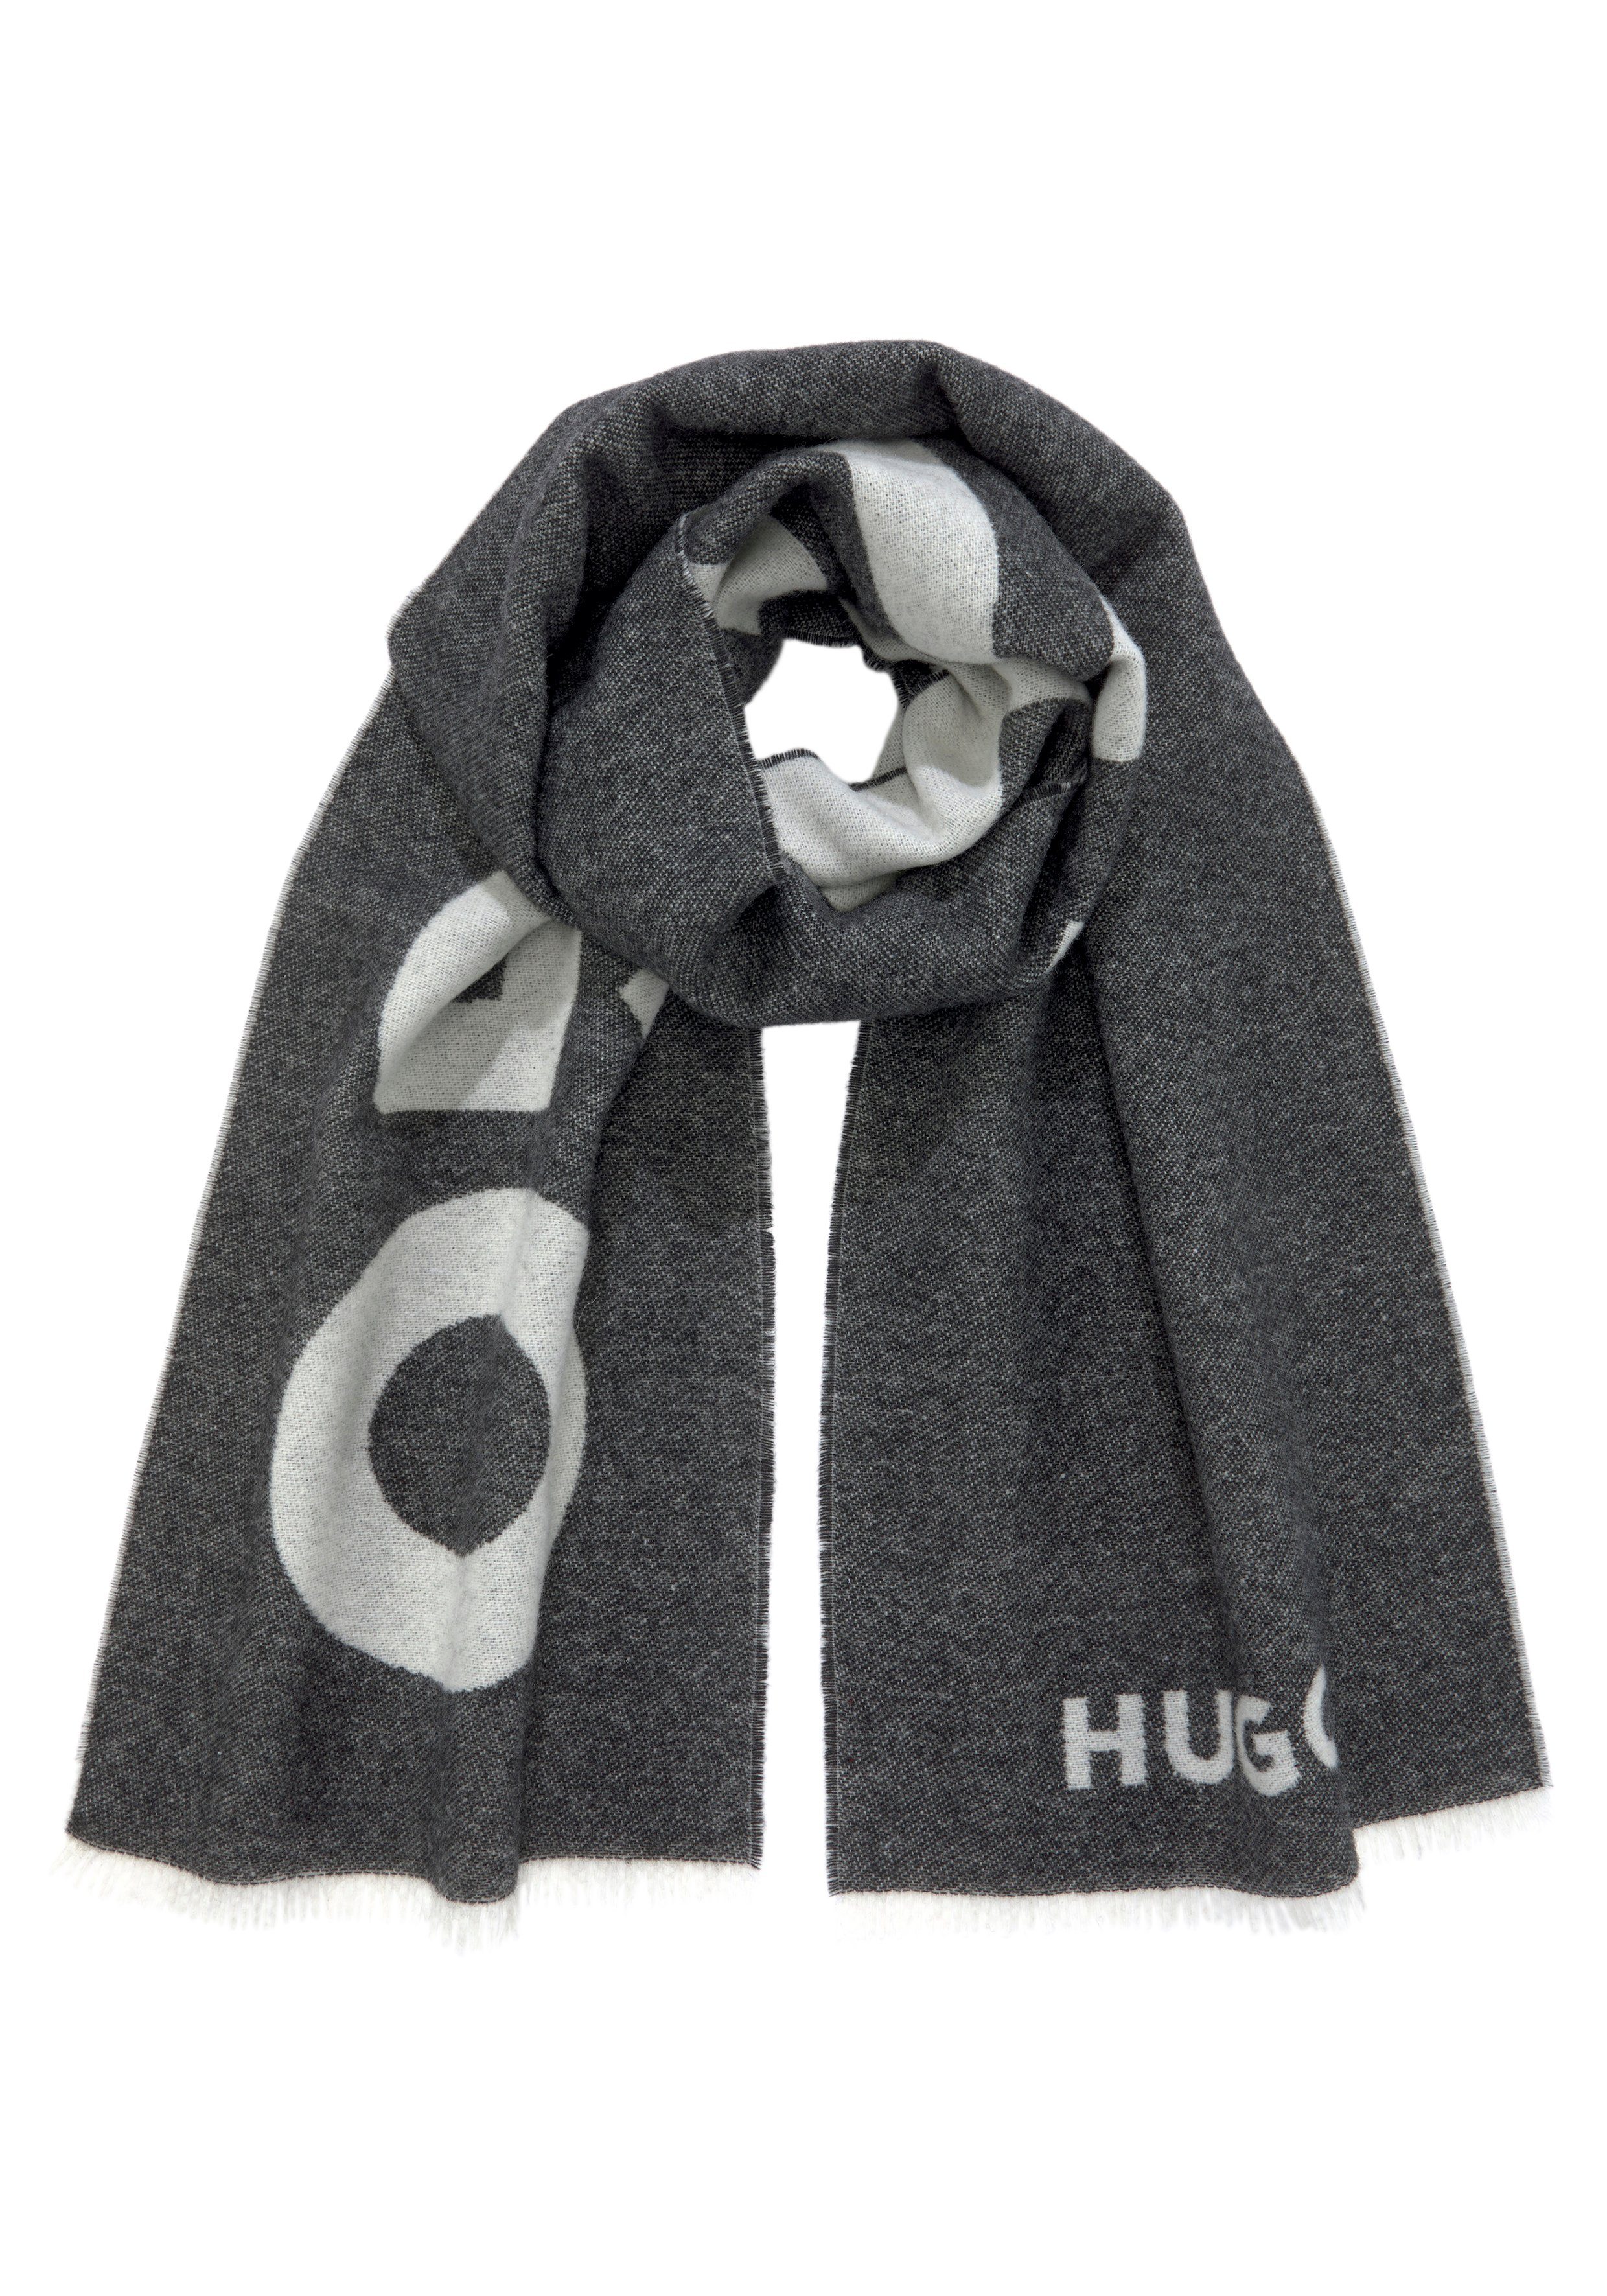 HUGO Schal Alexie, aus Woll-Mix mit Kontrastfarbenem Hugo-Logo, 200 x 32 cm Schwarz (001)